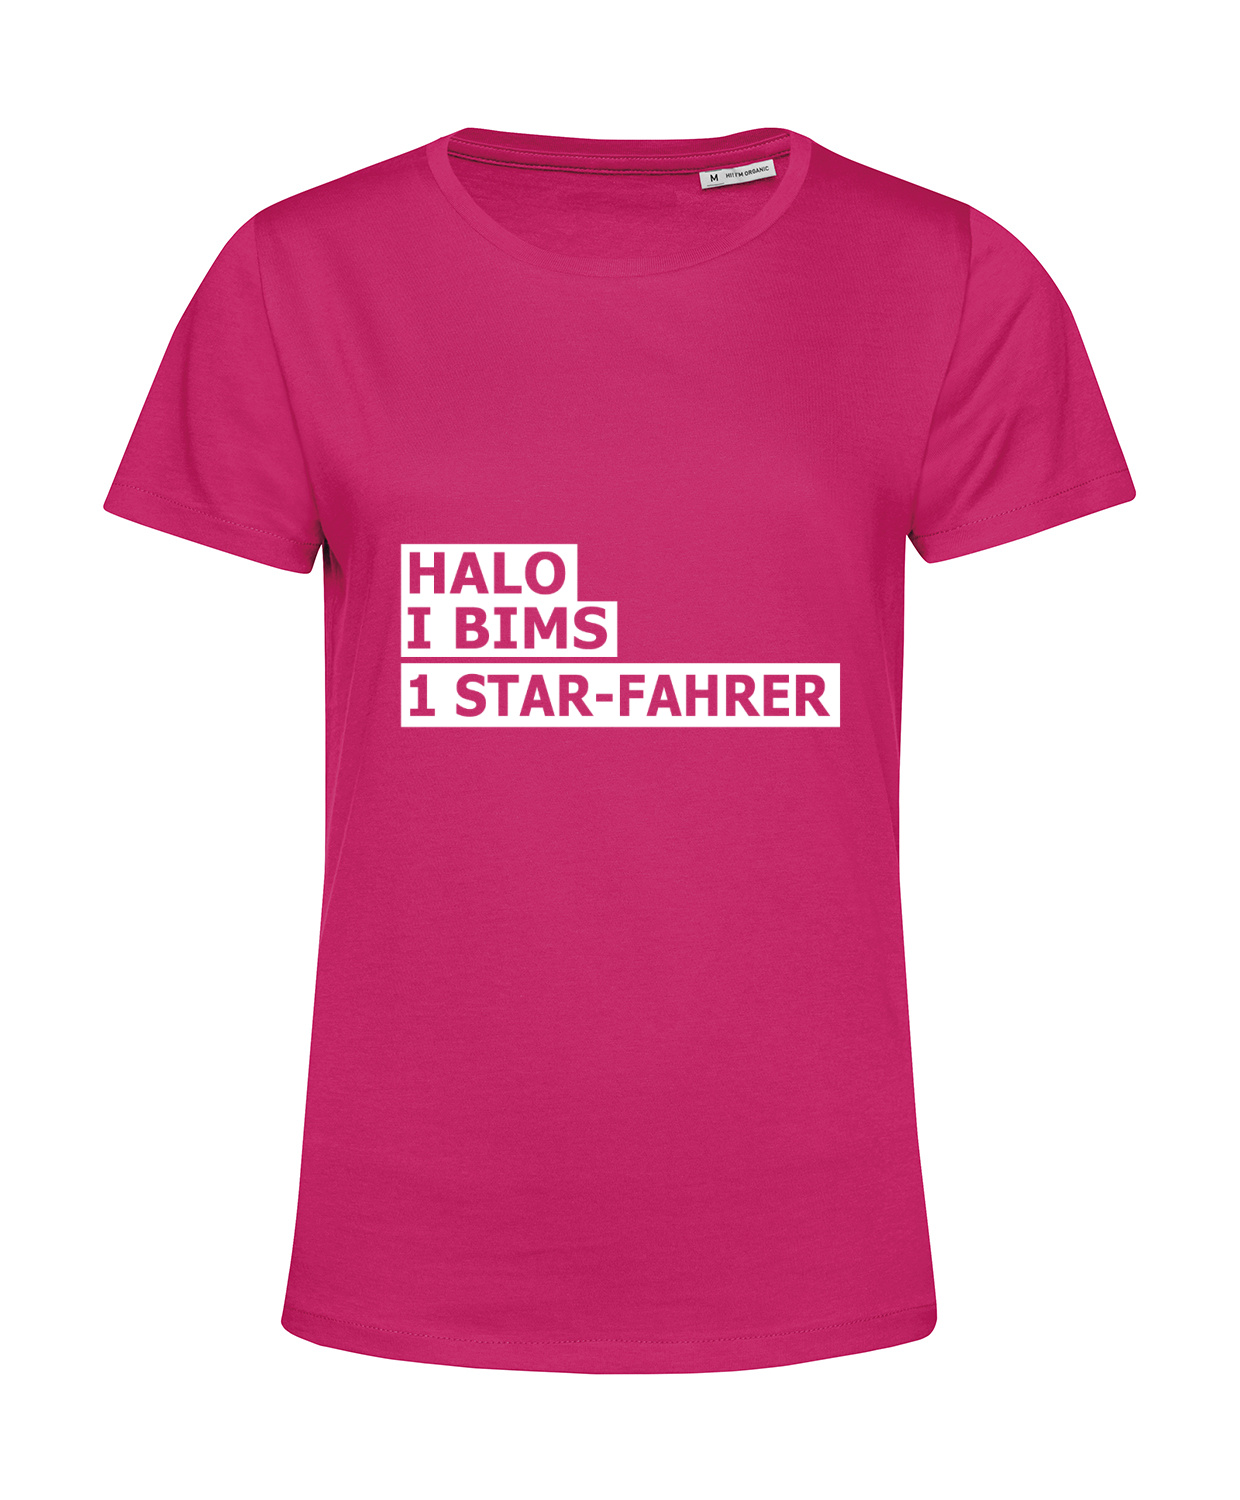 Nachhaltiges T-Shirt Damen 2Takter - Halo I bims 1 Star-Fahrer